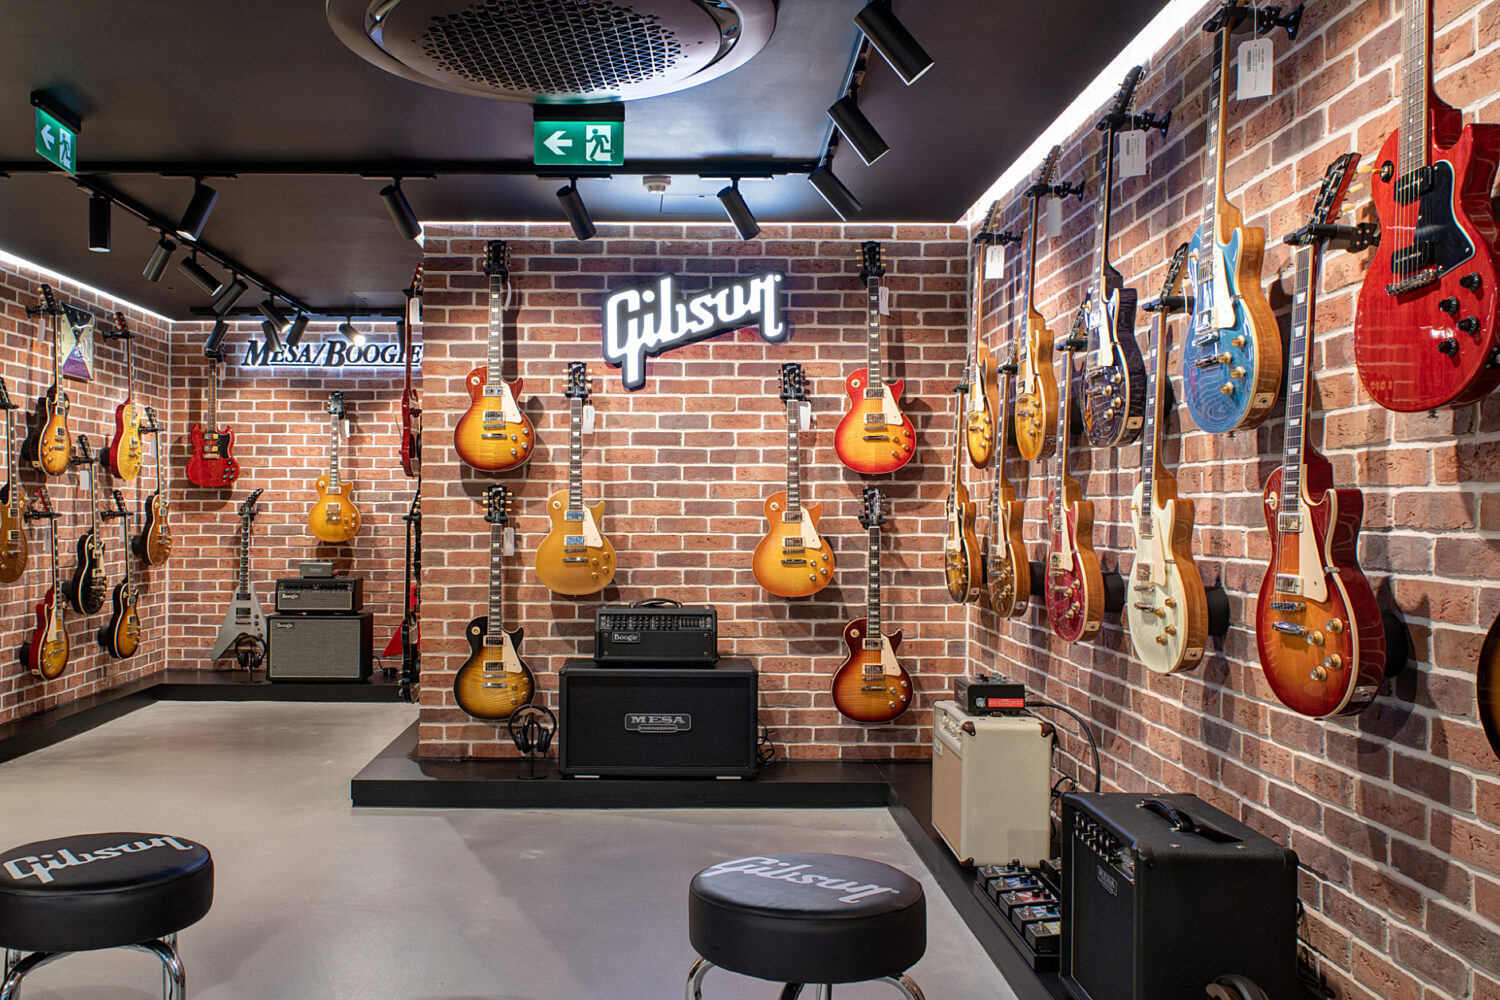 Gibson guitars showroom in Soho